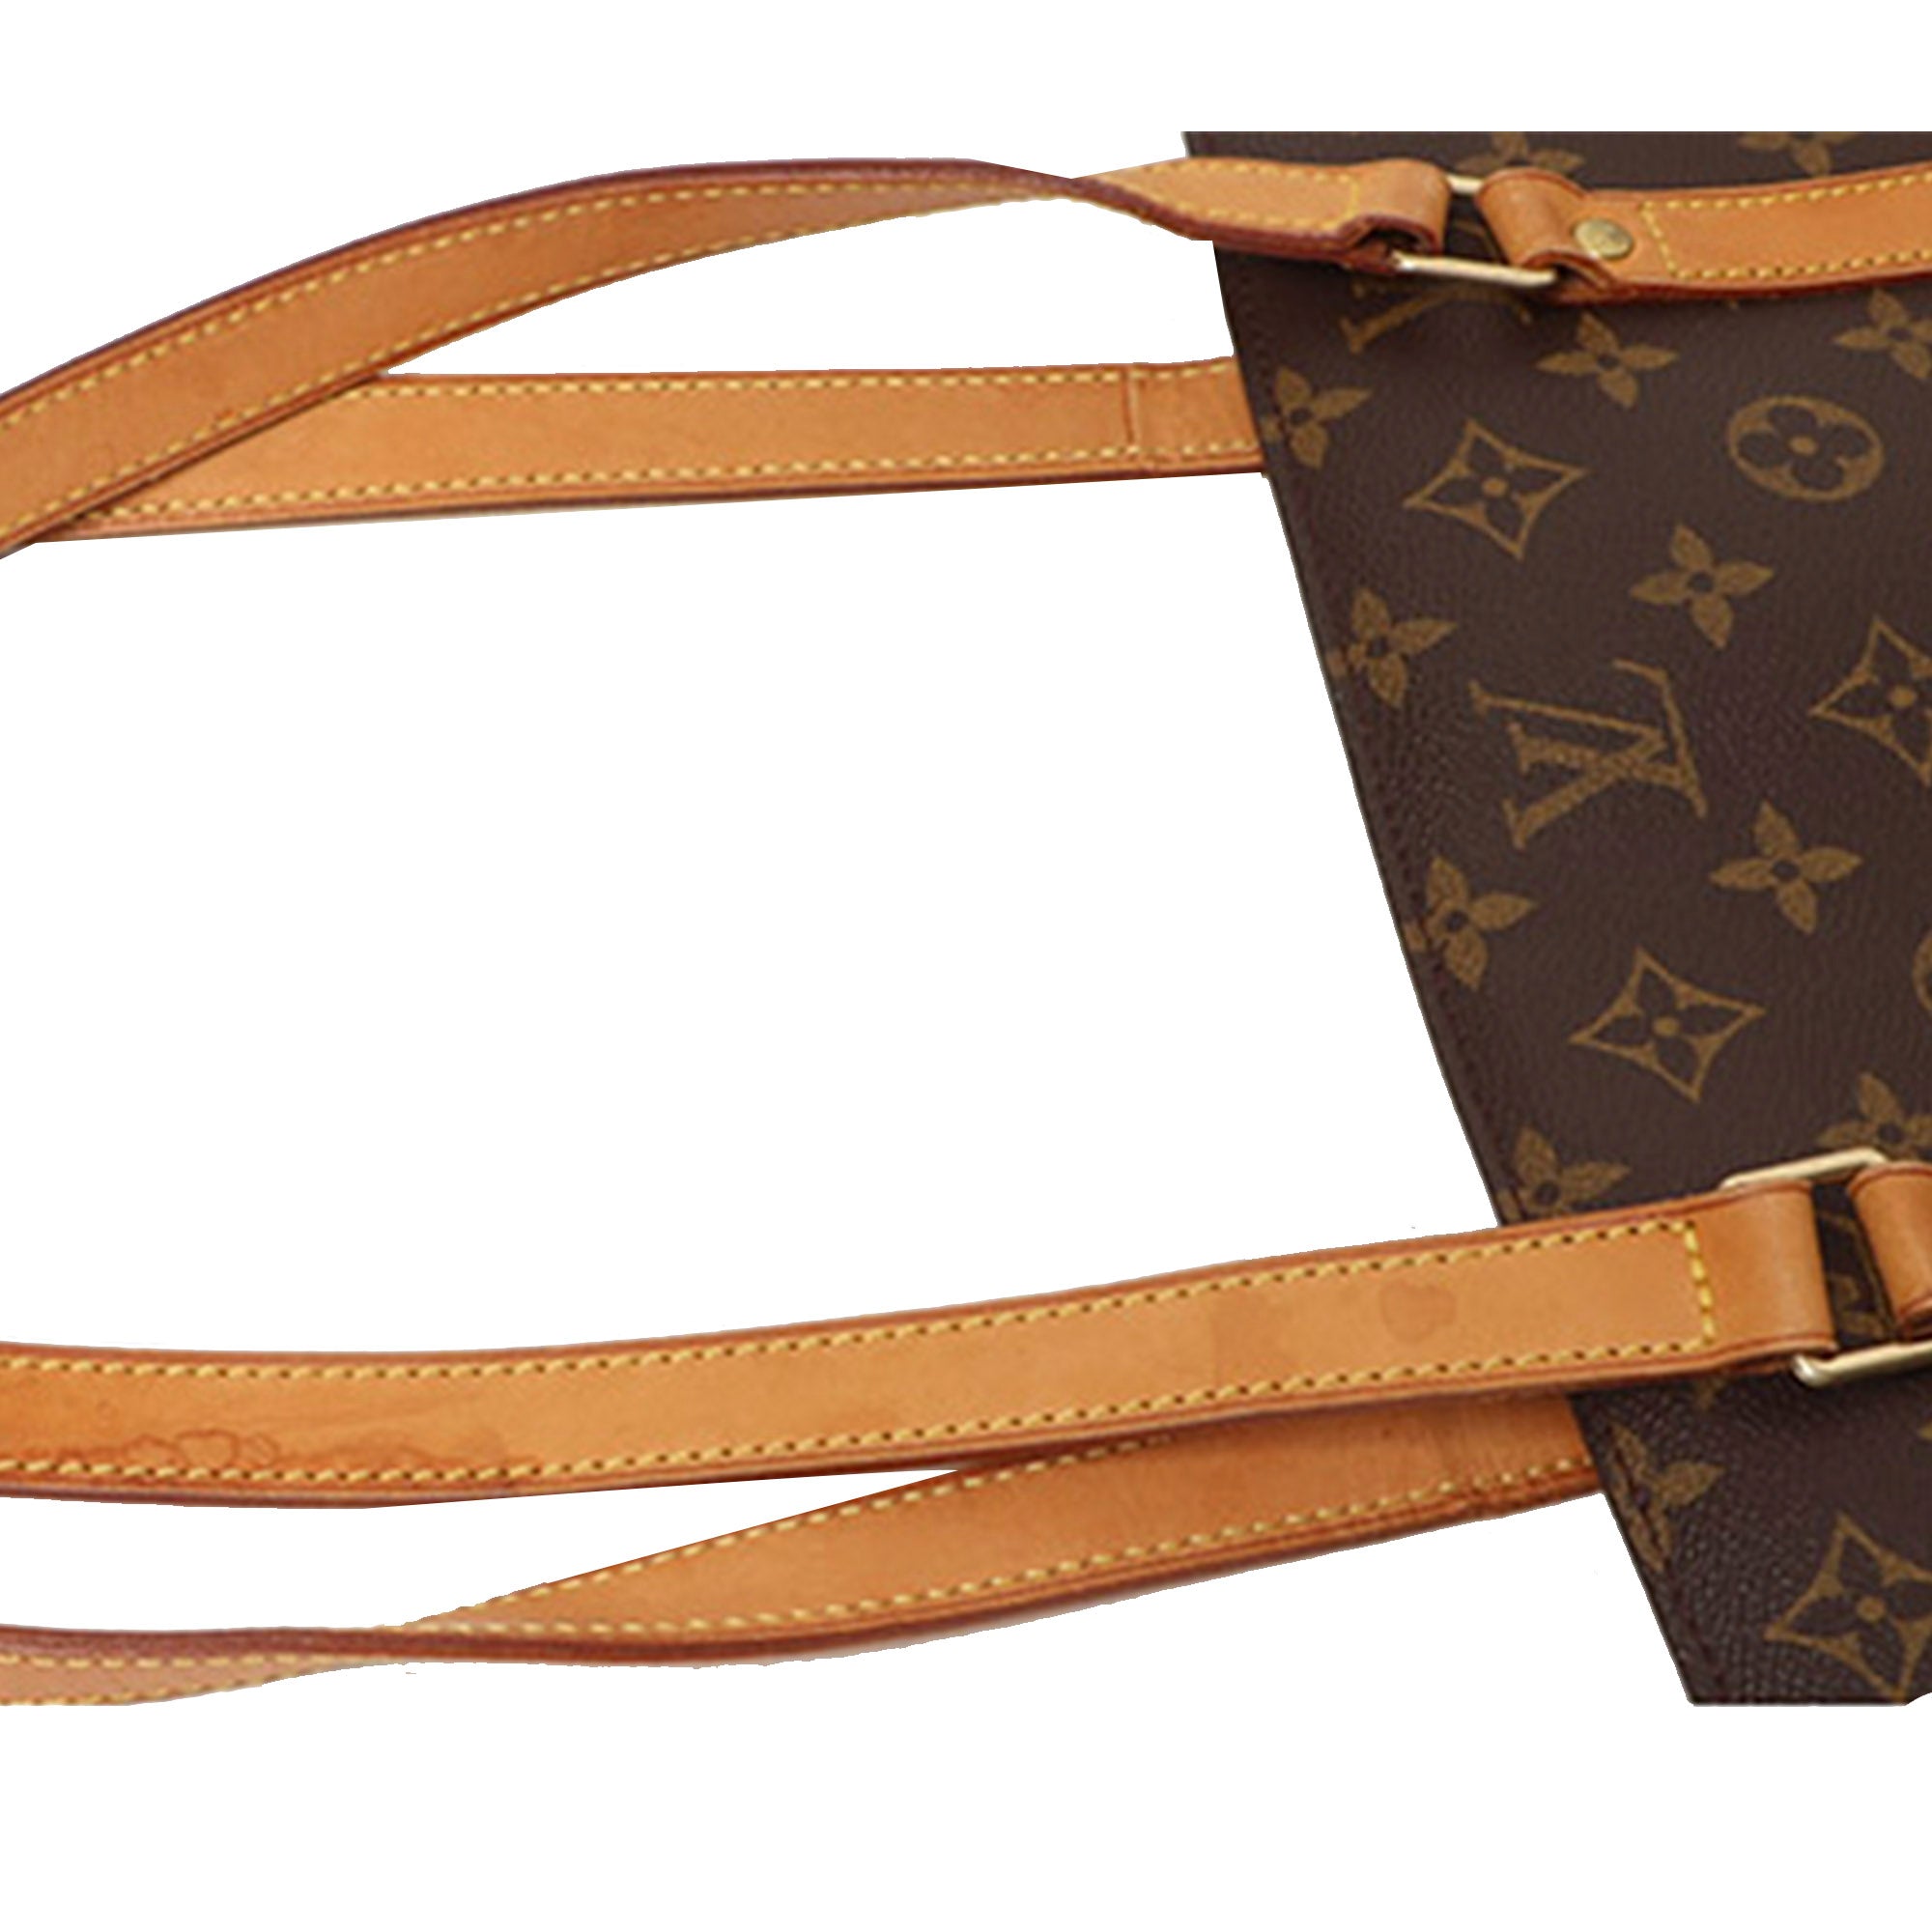 Brown Louis Vuitton Monogram Babylone Tote Bag